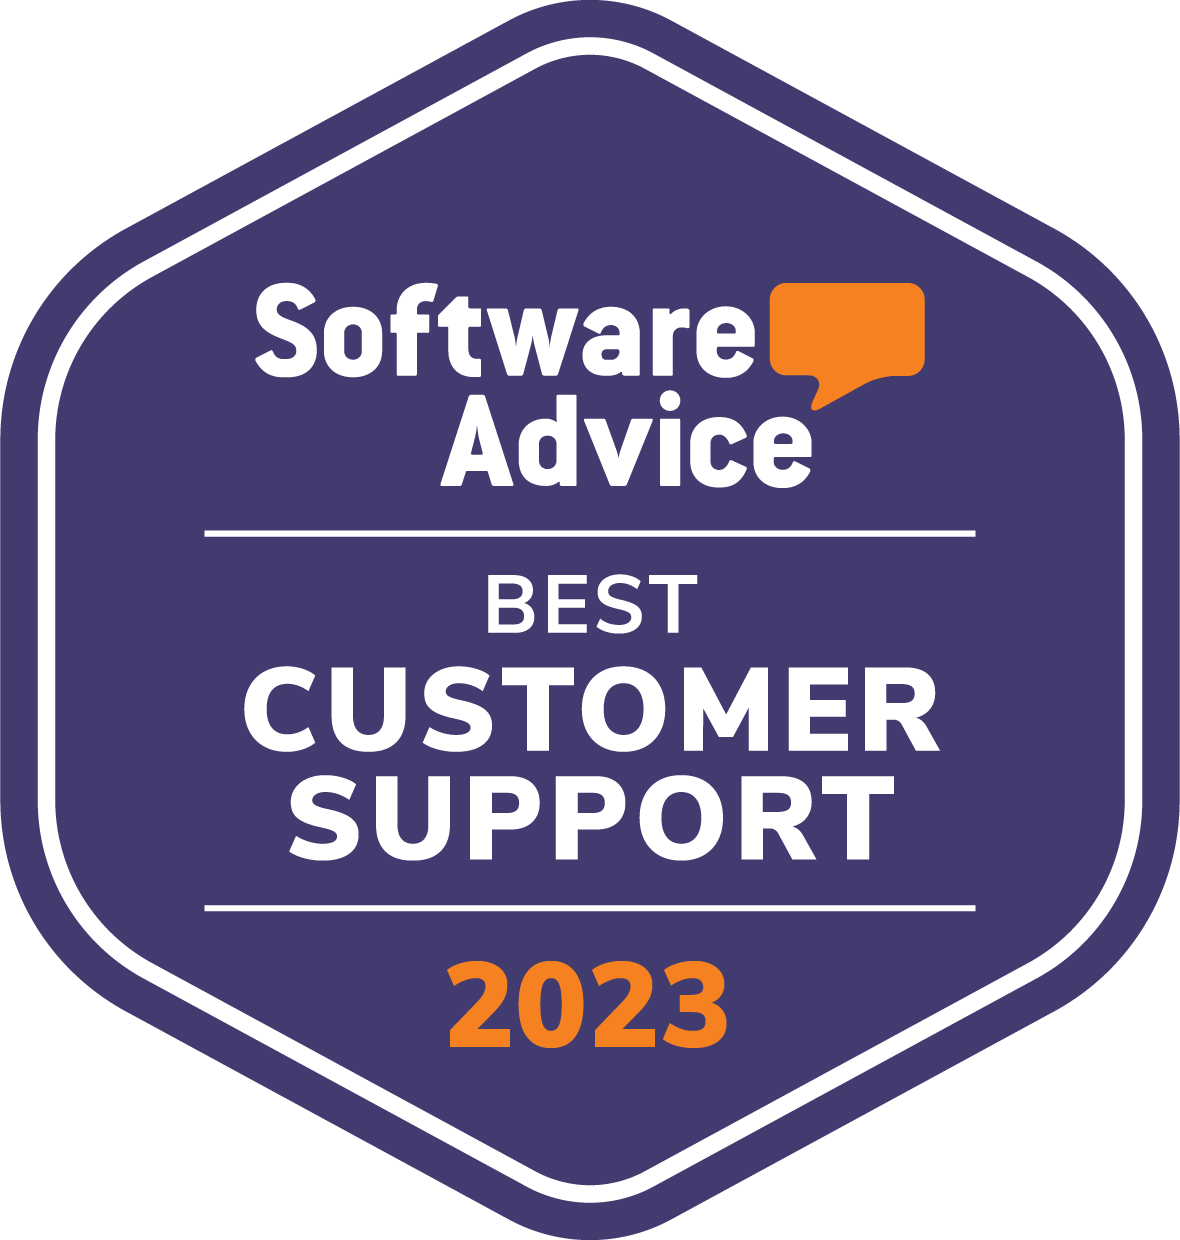 2023 Best Customer Support - Software Advice